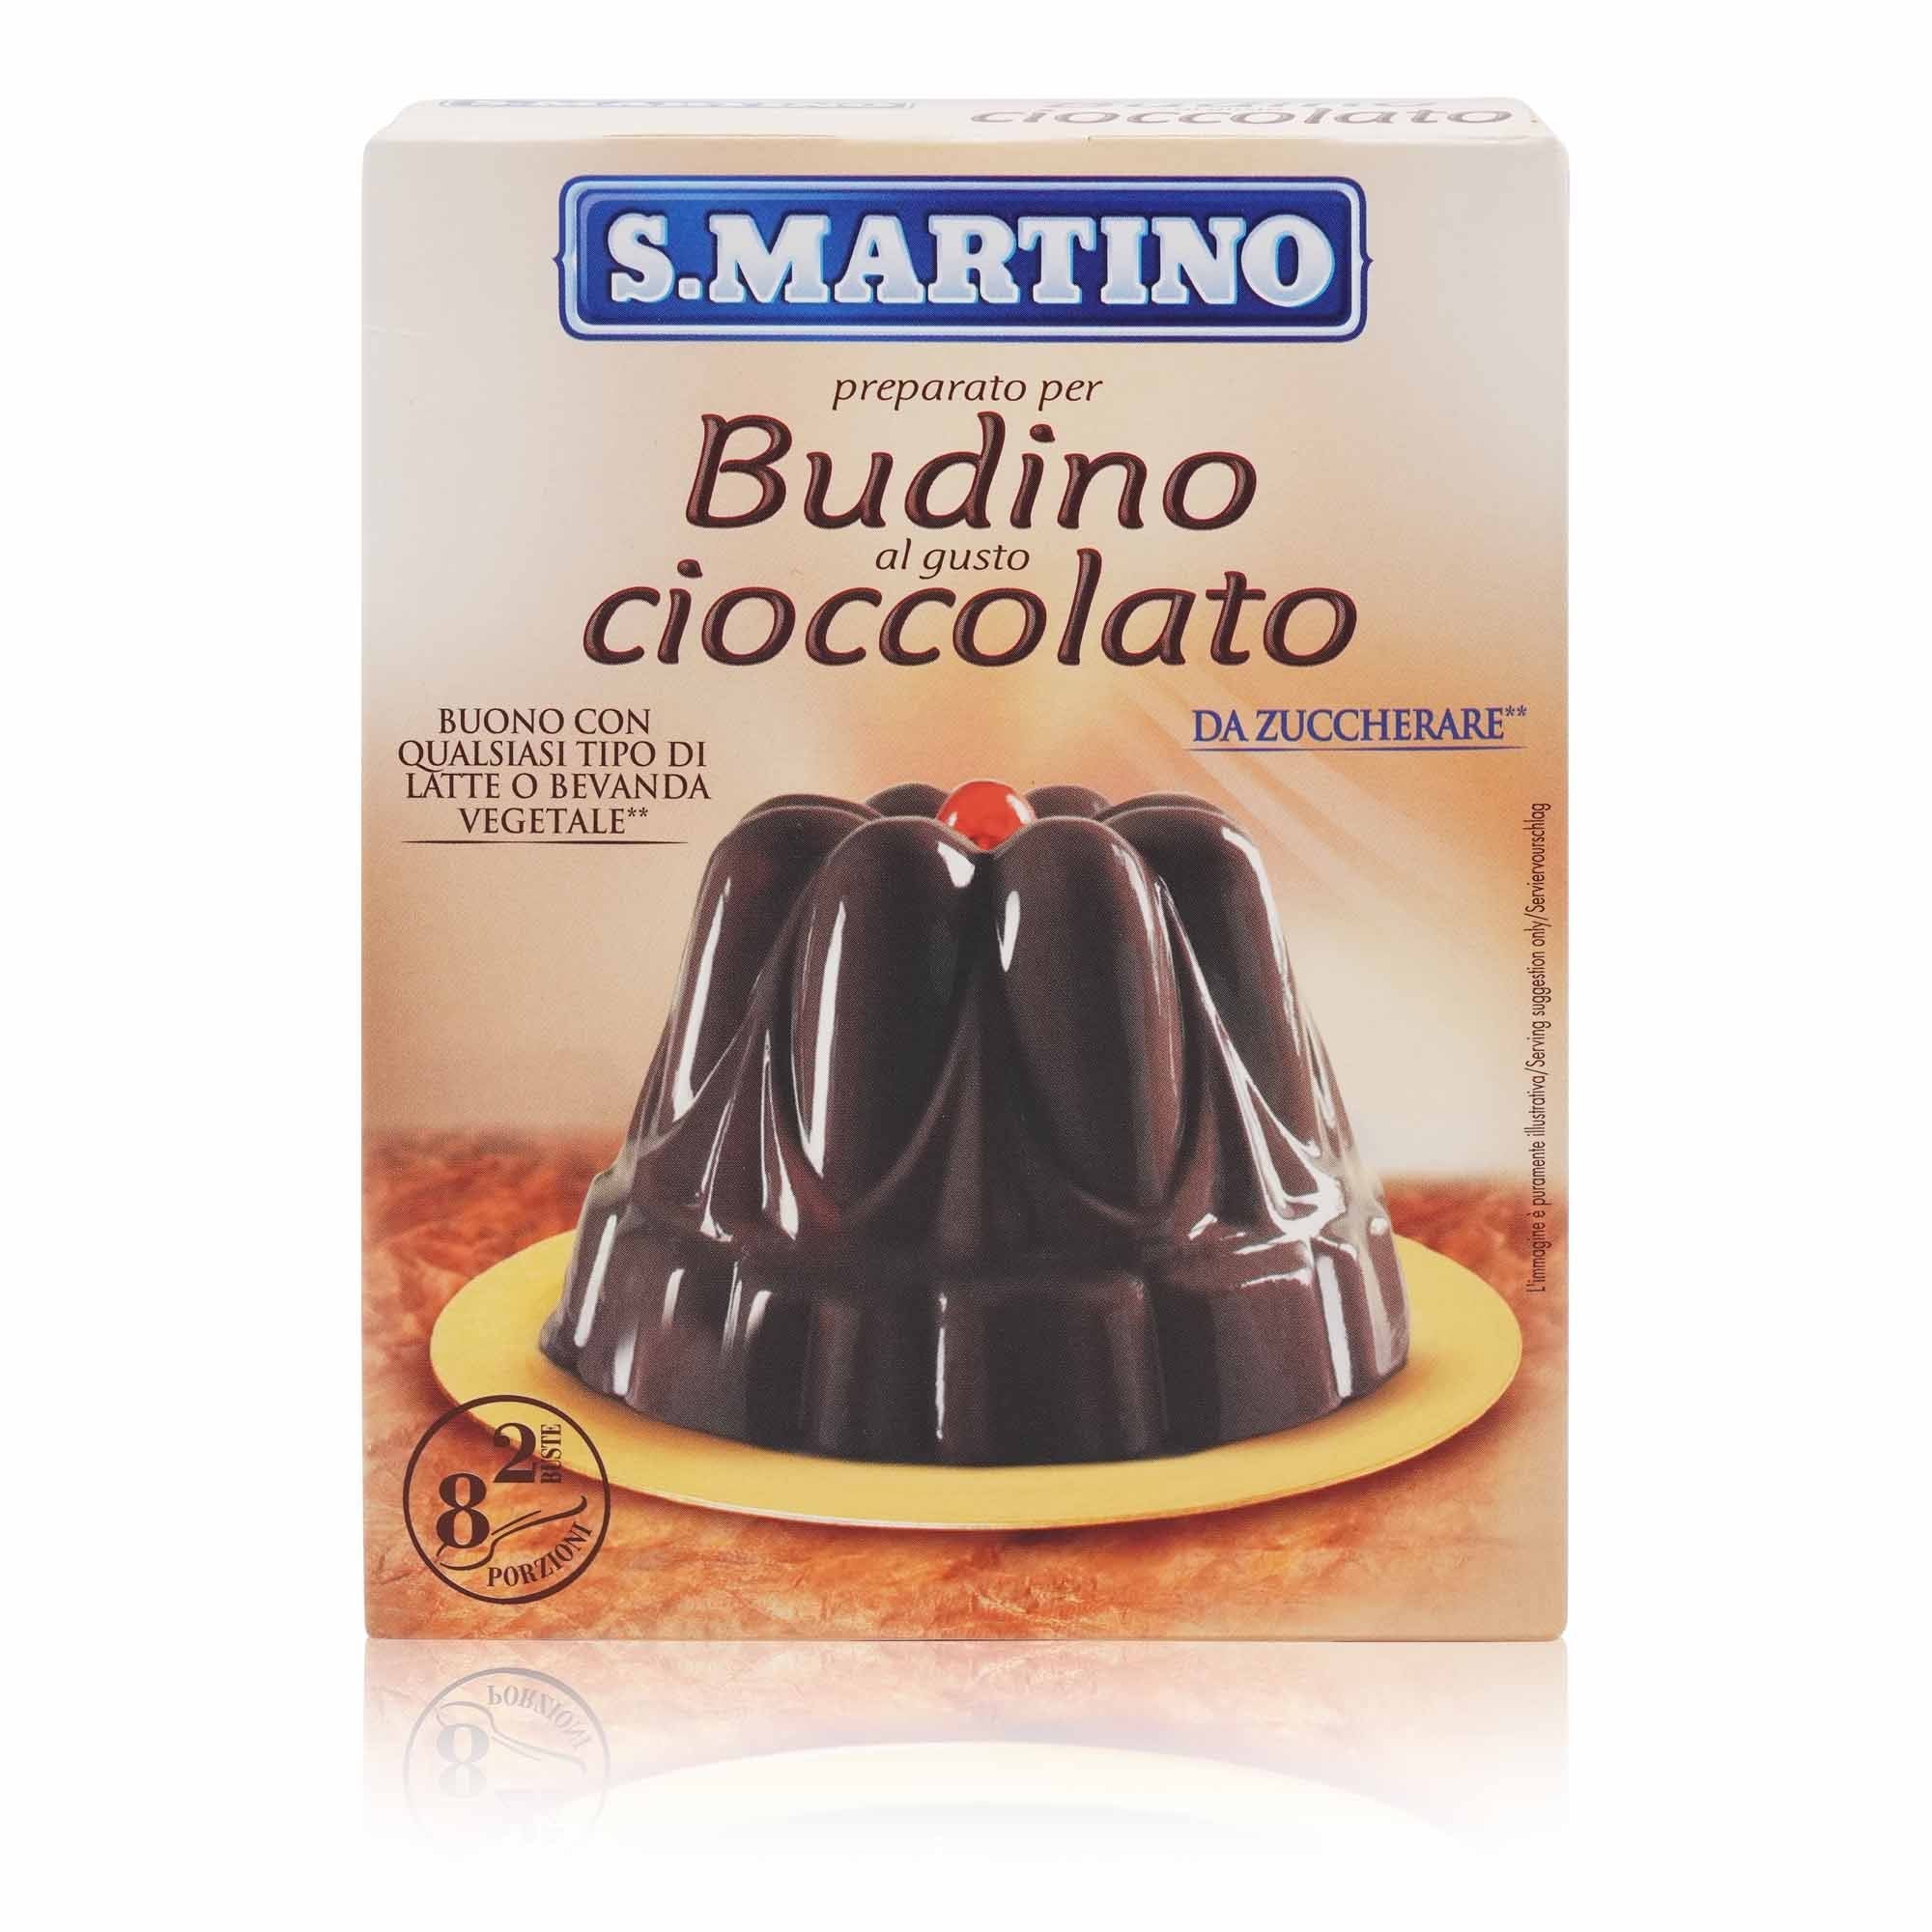 S.MARTINO Budino al Cioccolato – Schokoladen-Pudding - 0,096kg - italienisch-einkaufen.de